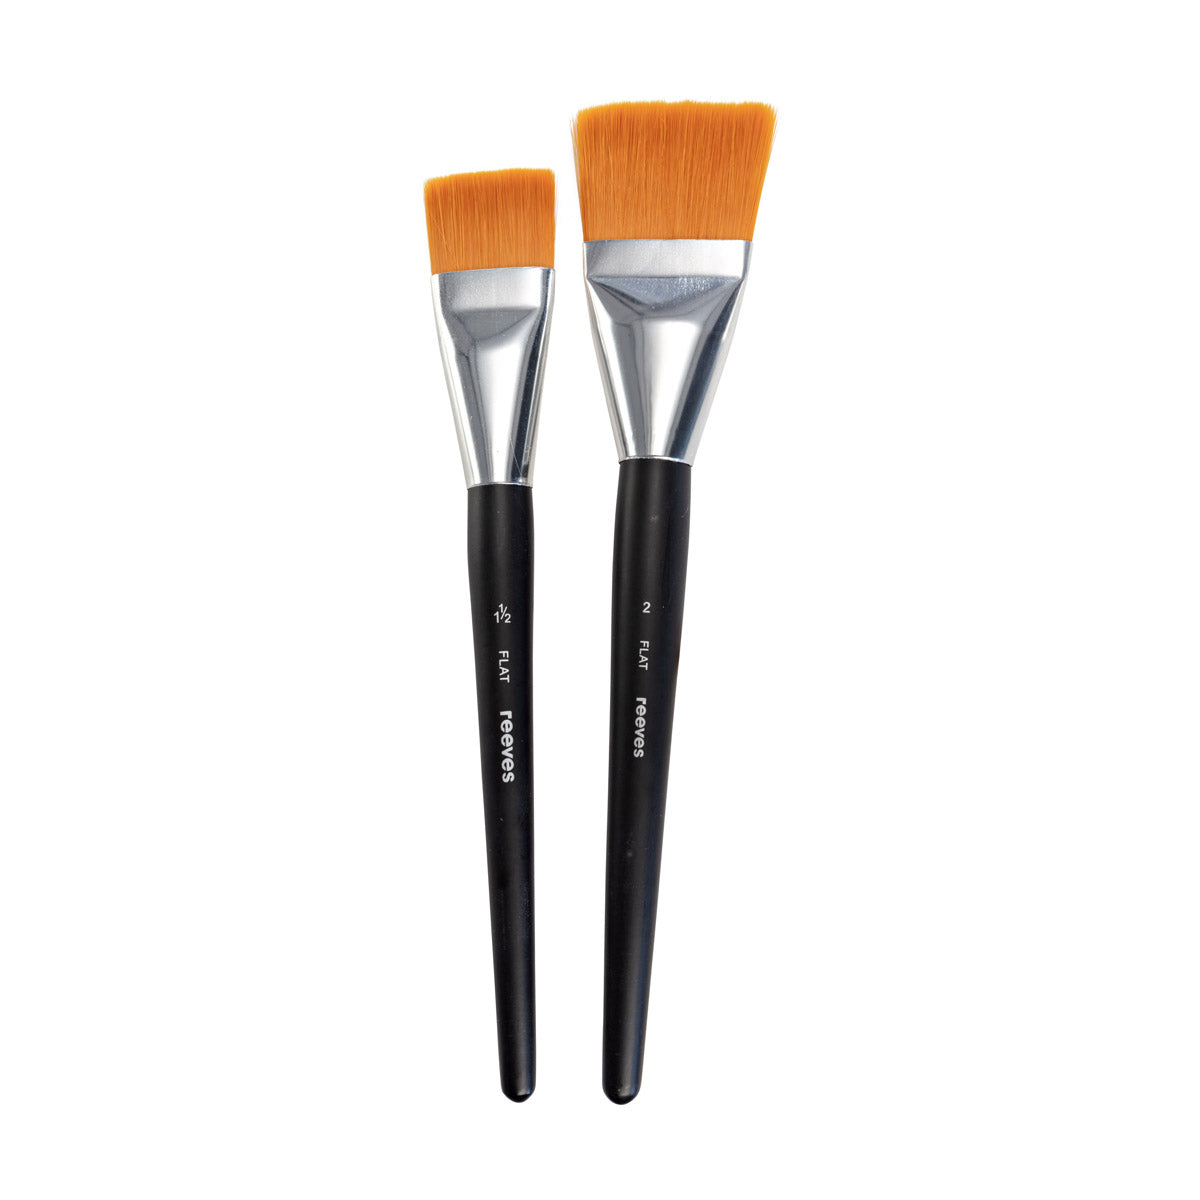 Reeves - Mixed Media Wash Brush set - Short Handle  - 2x Brush Pack